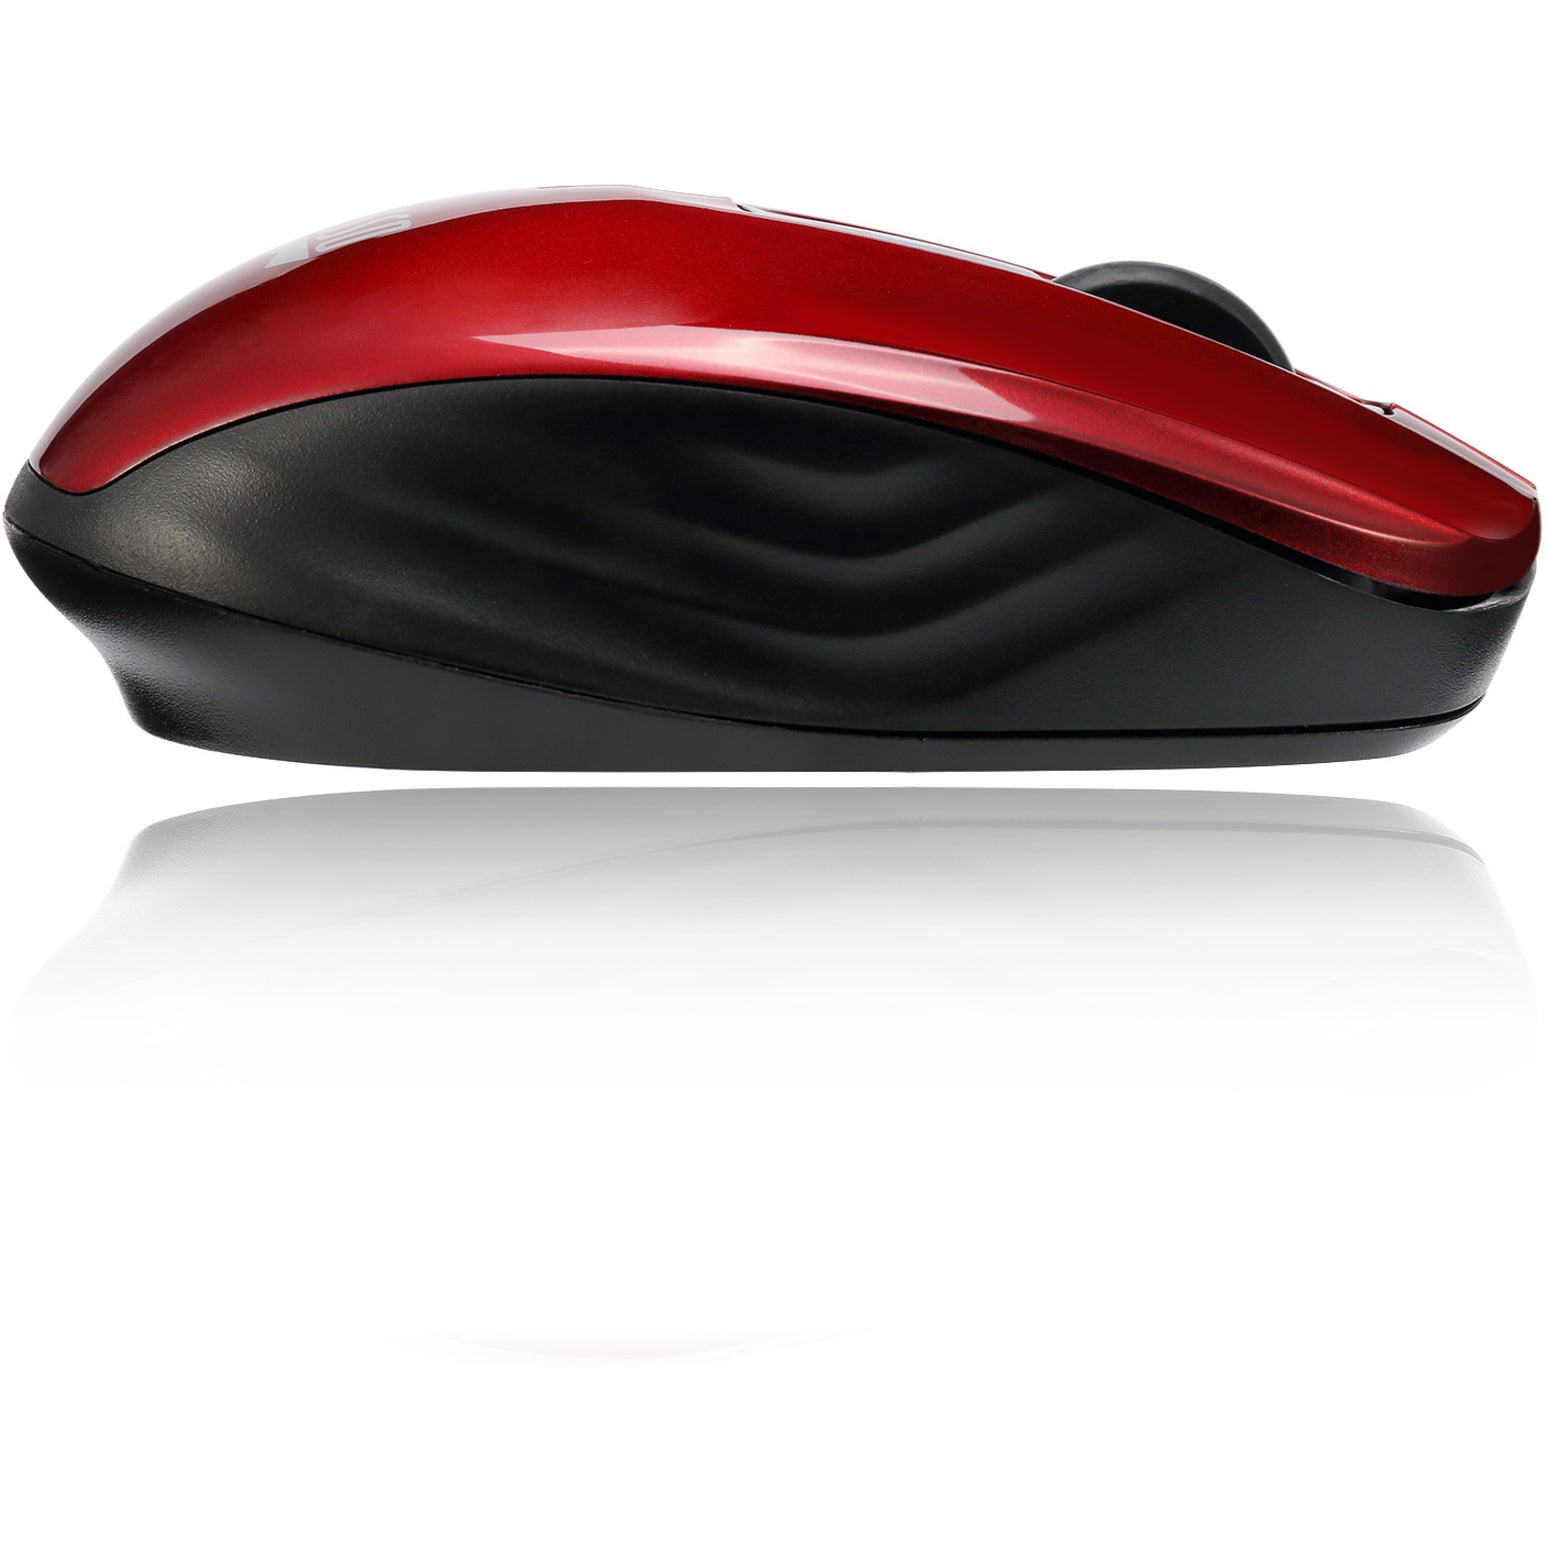 Adesso iMouse S50R 2.4GHz Wireless Mini Mouse, Ergonomic Fit, Scroll Wheel, 1200 dpi